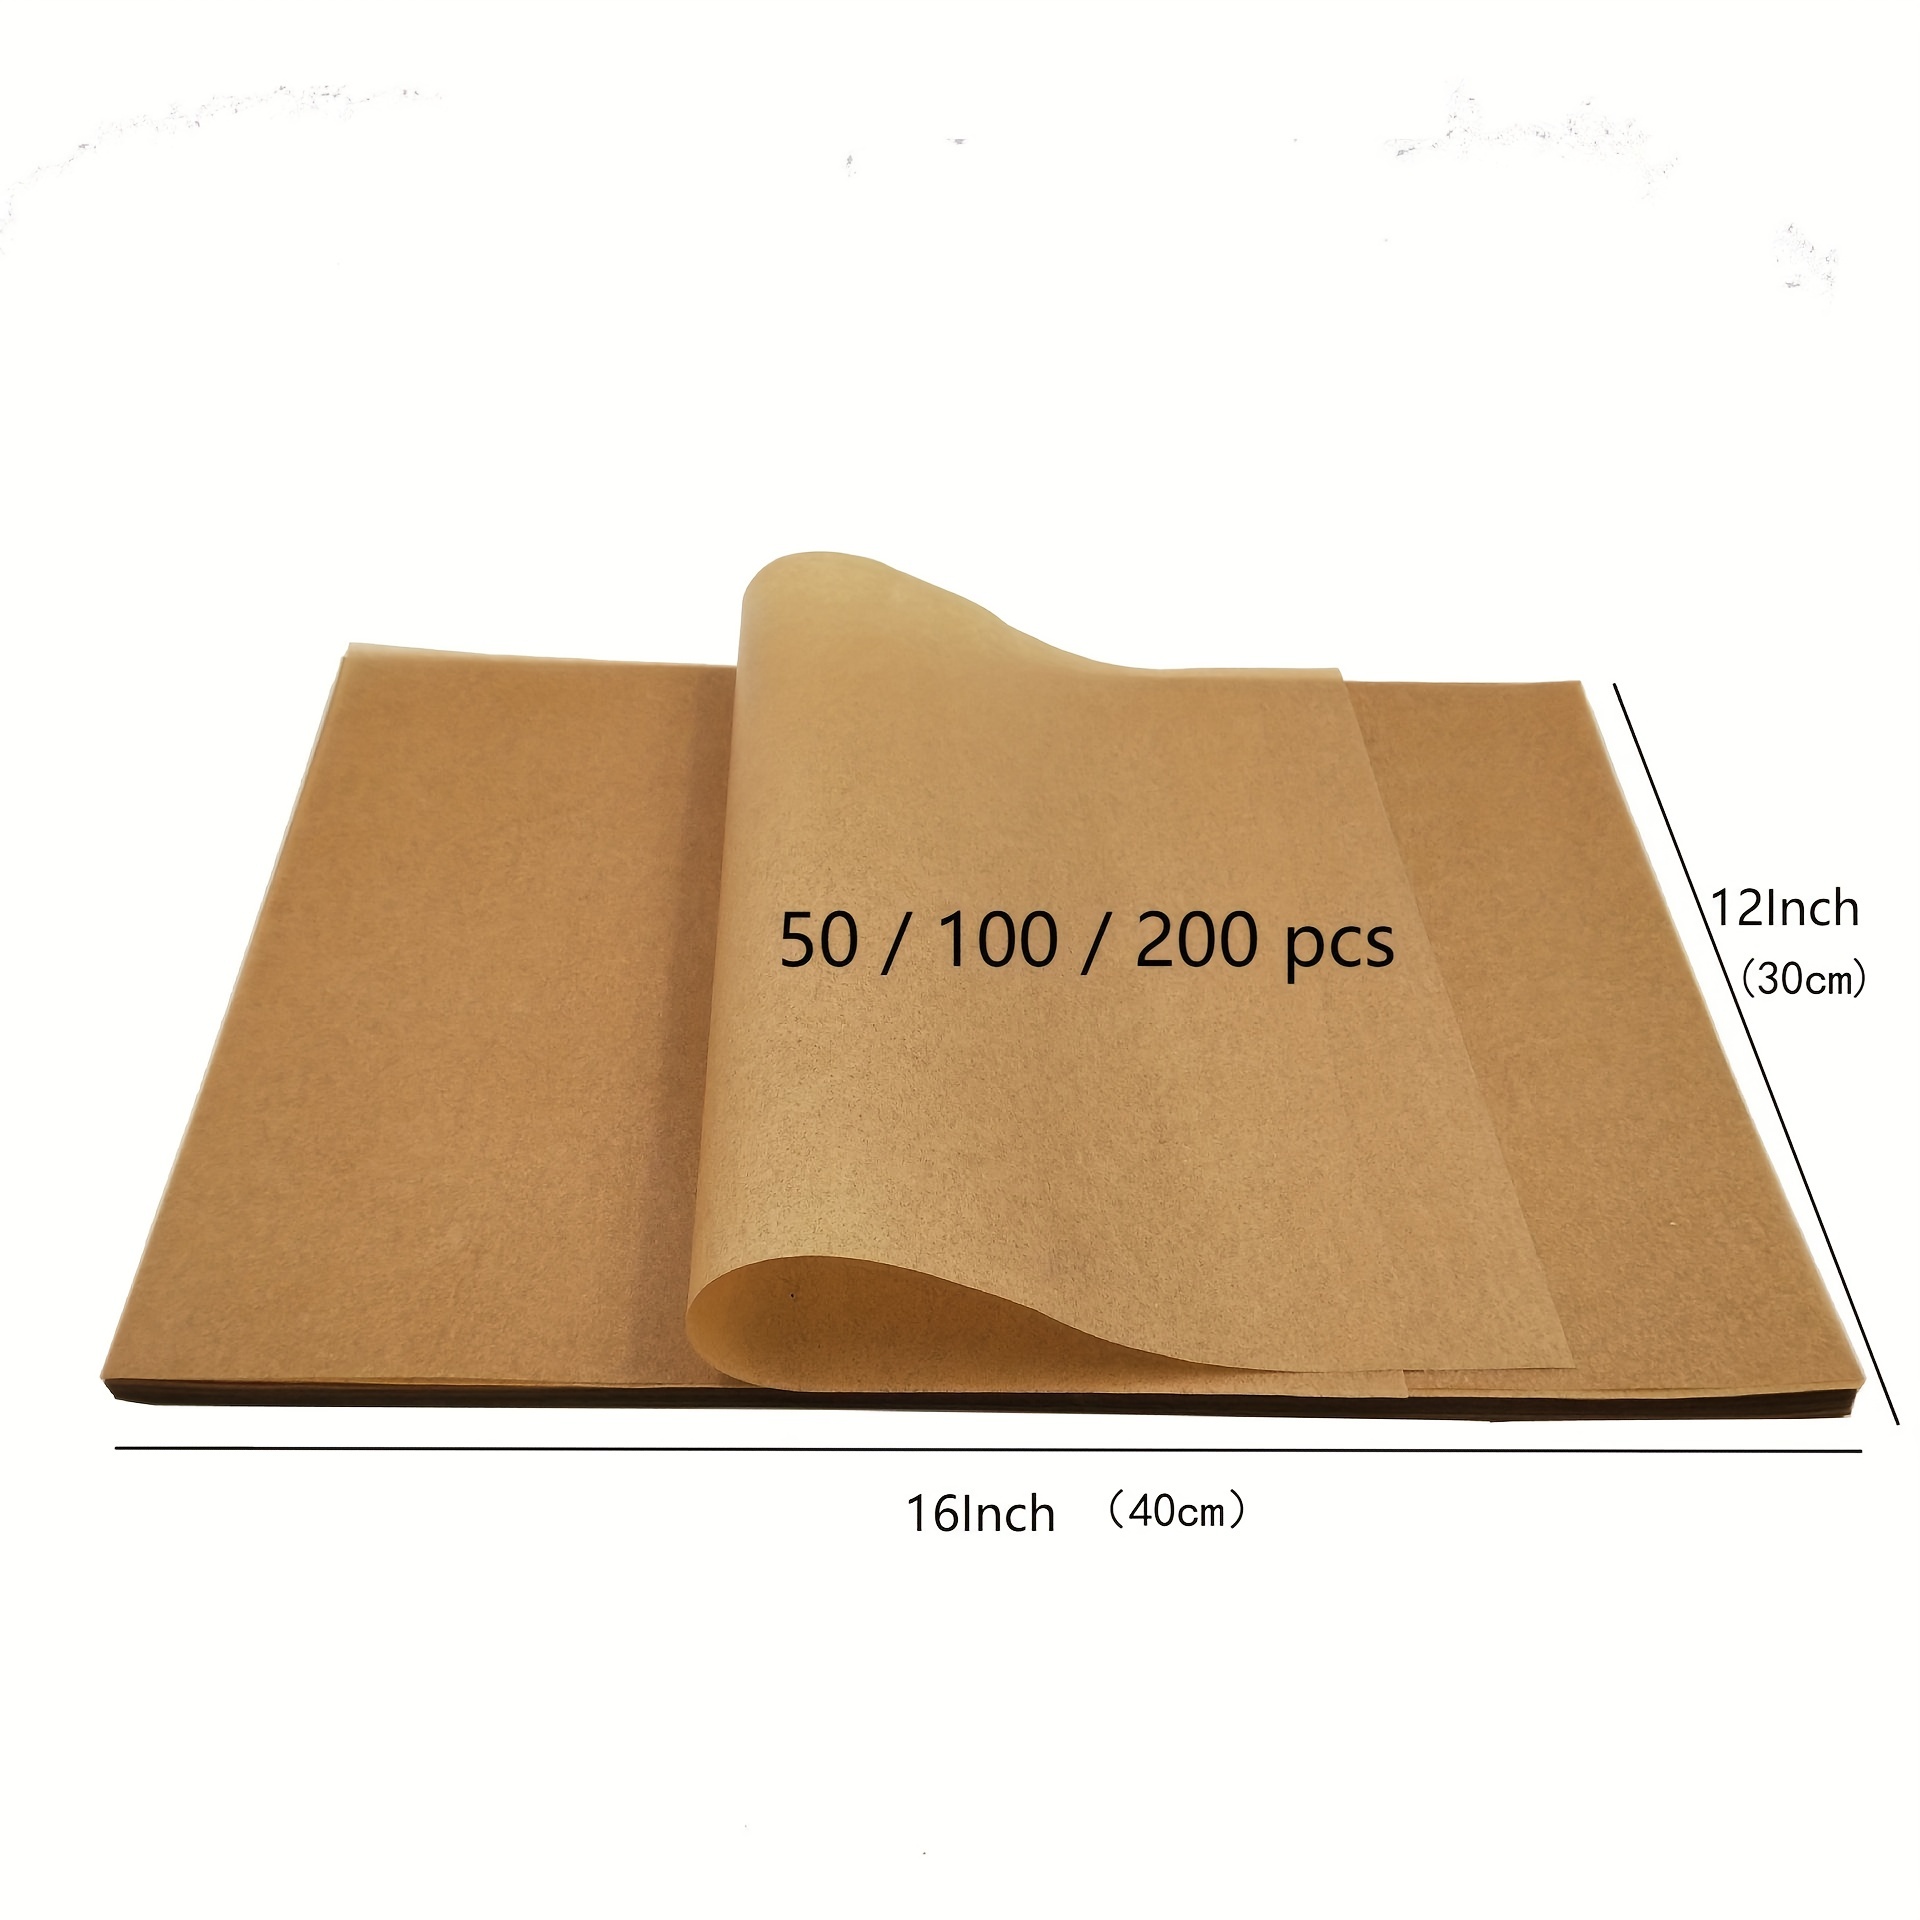 SMARTAKE 200 Pcs Parchment Paper Baking Sheets, 12x16 Inches Non